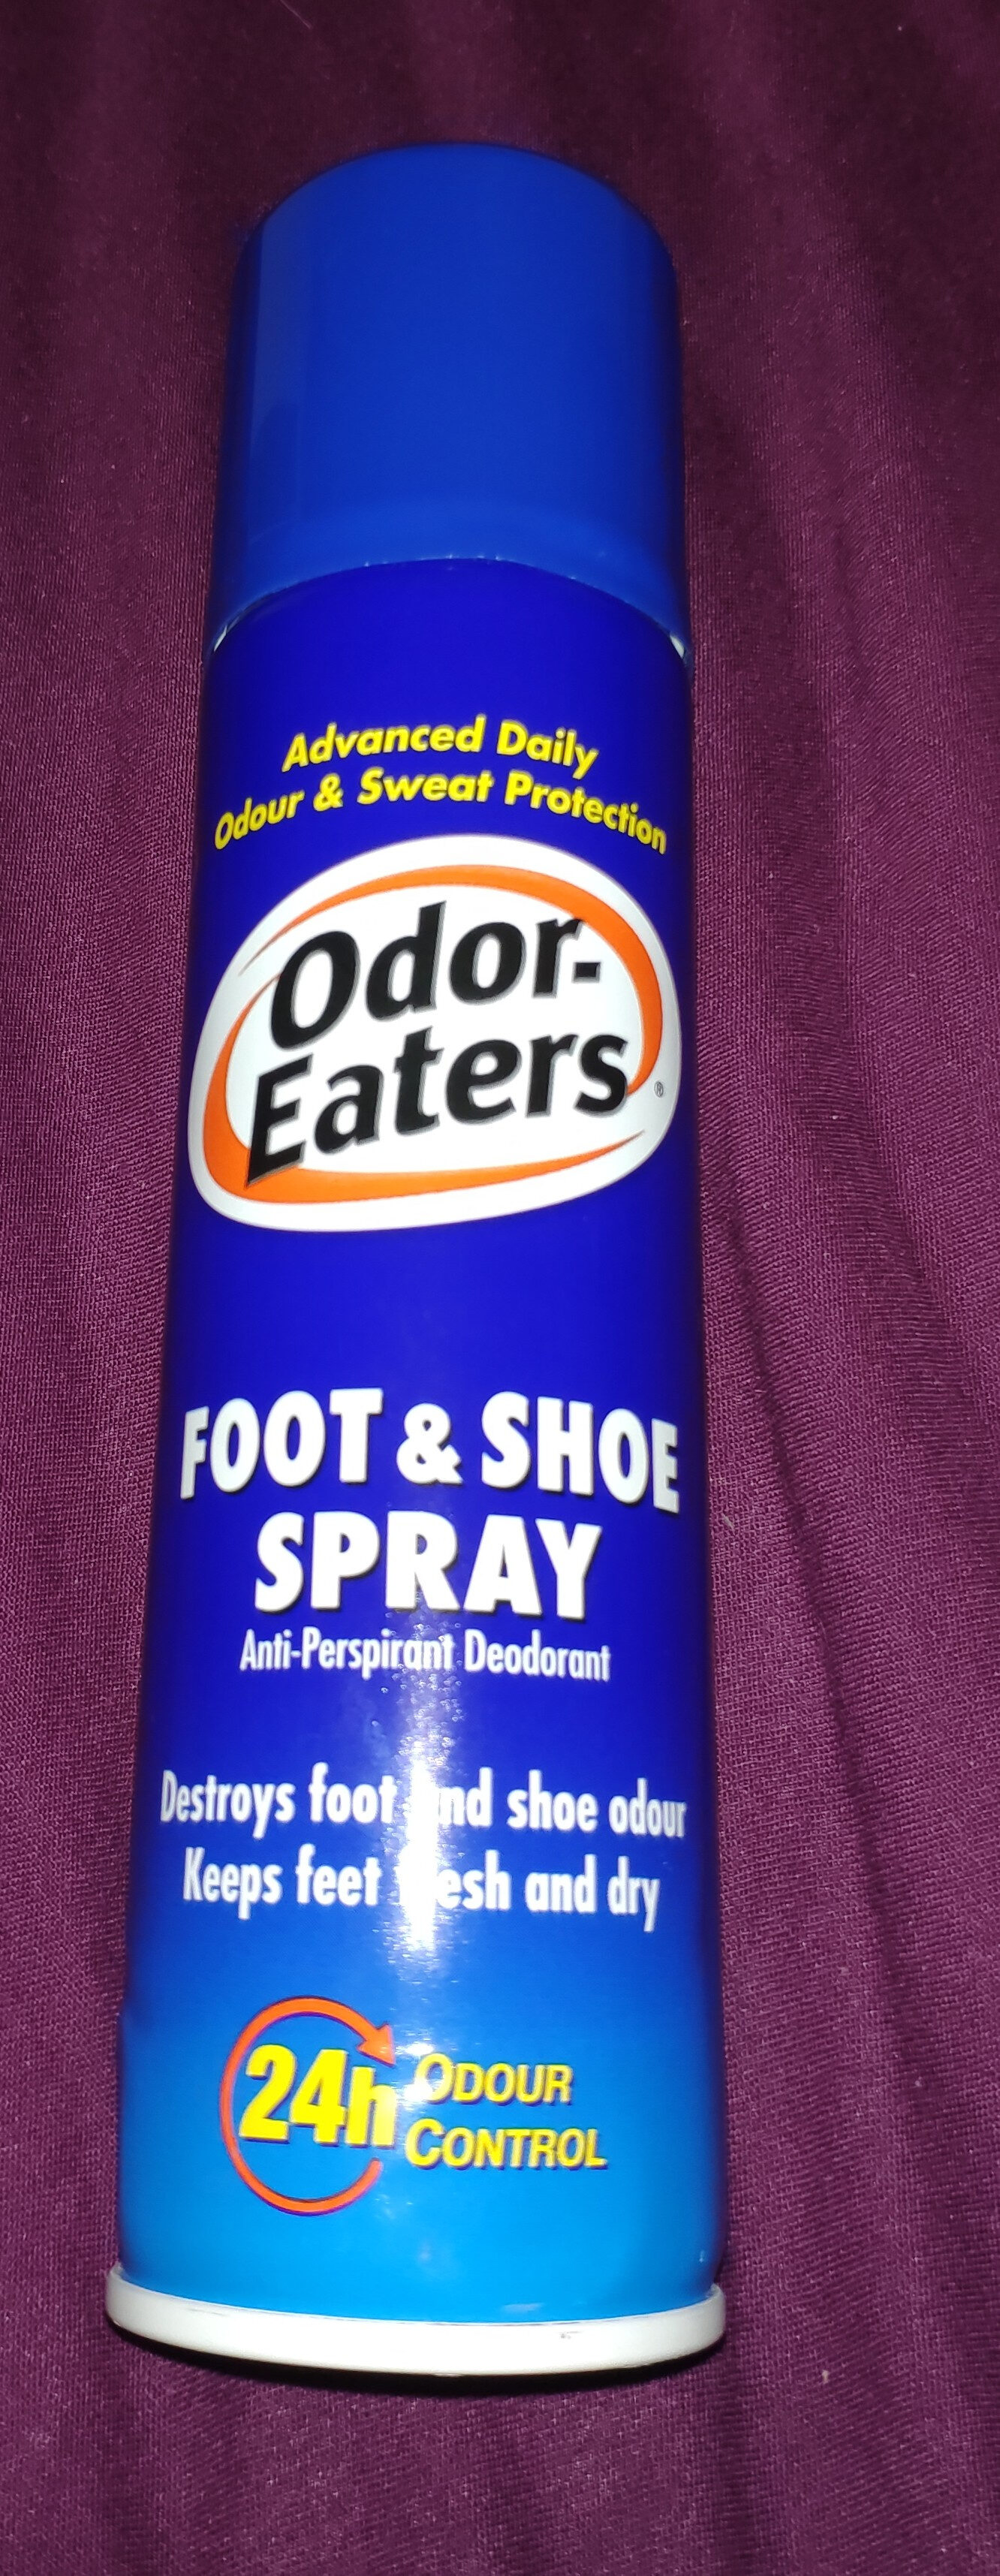 Foot & Shoe Spray Anti-Perspriants Deodorant - Produit - en